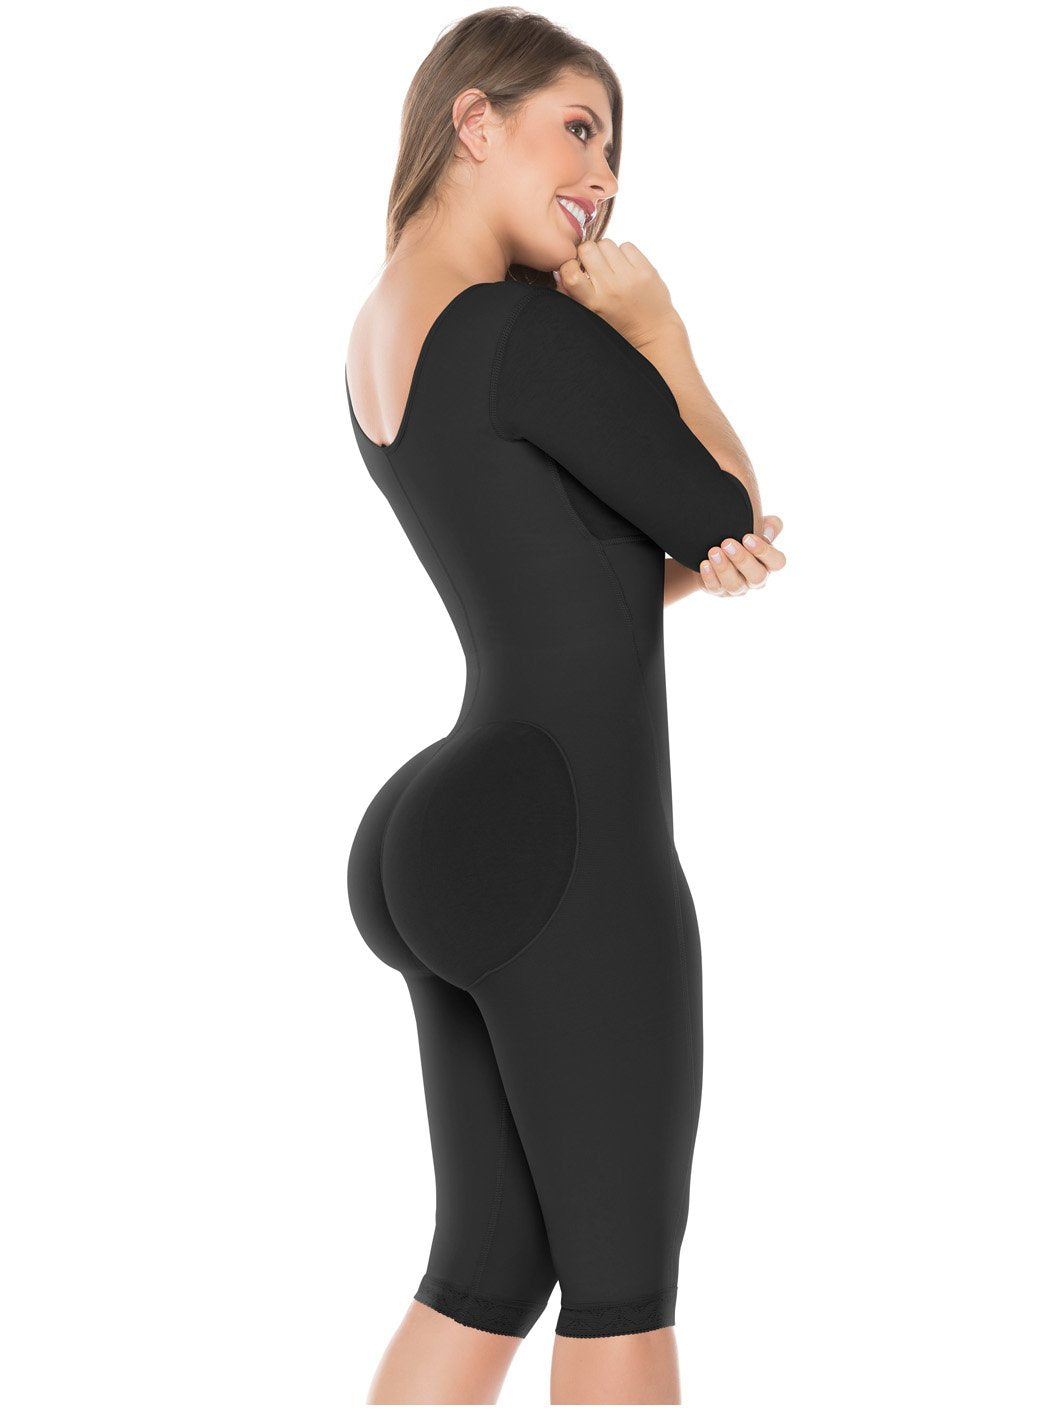 Salome 0525 Fajas Colombianas Reductoras Post Surgery Bodysuit Girdles for  Women Black L